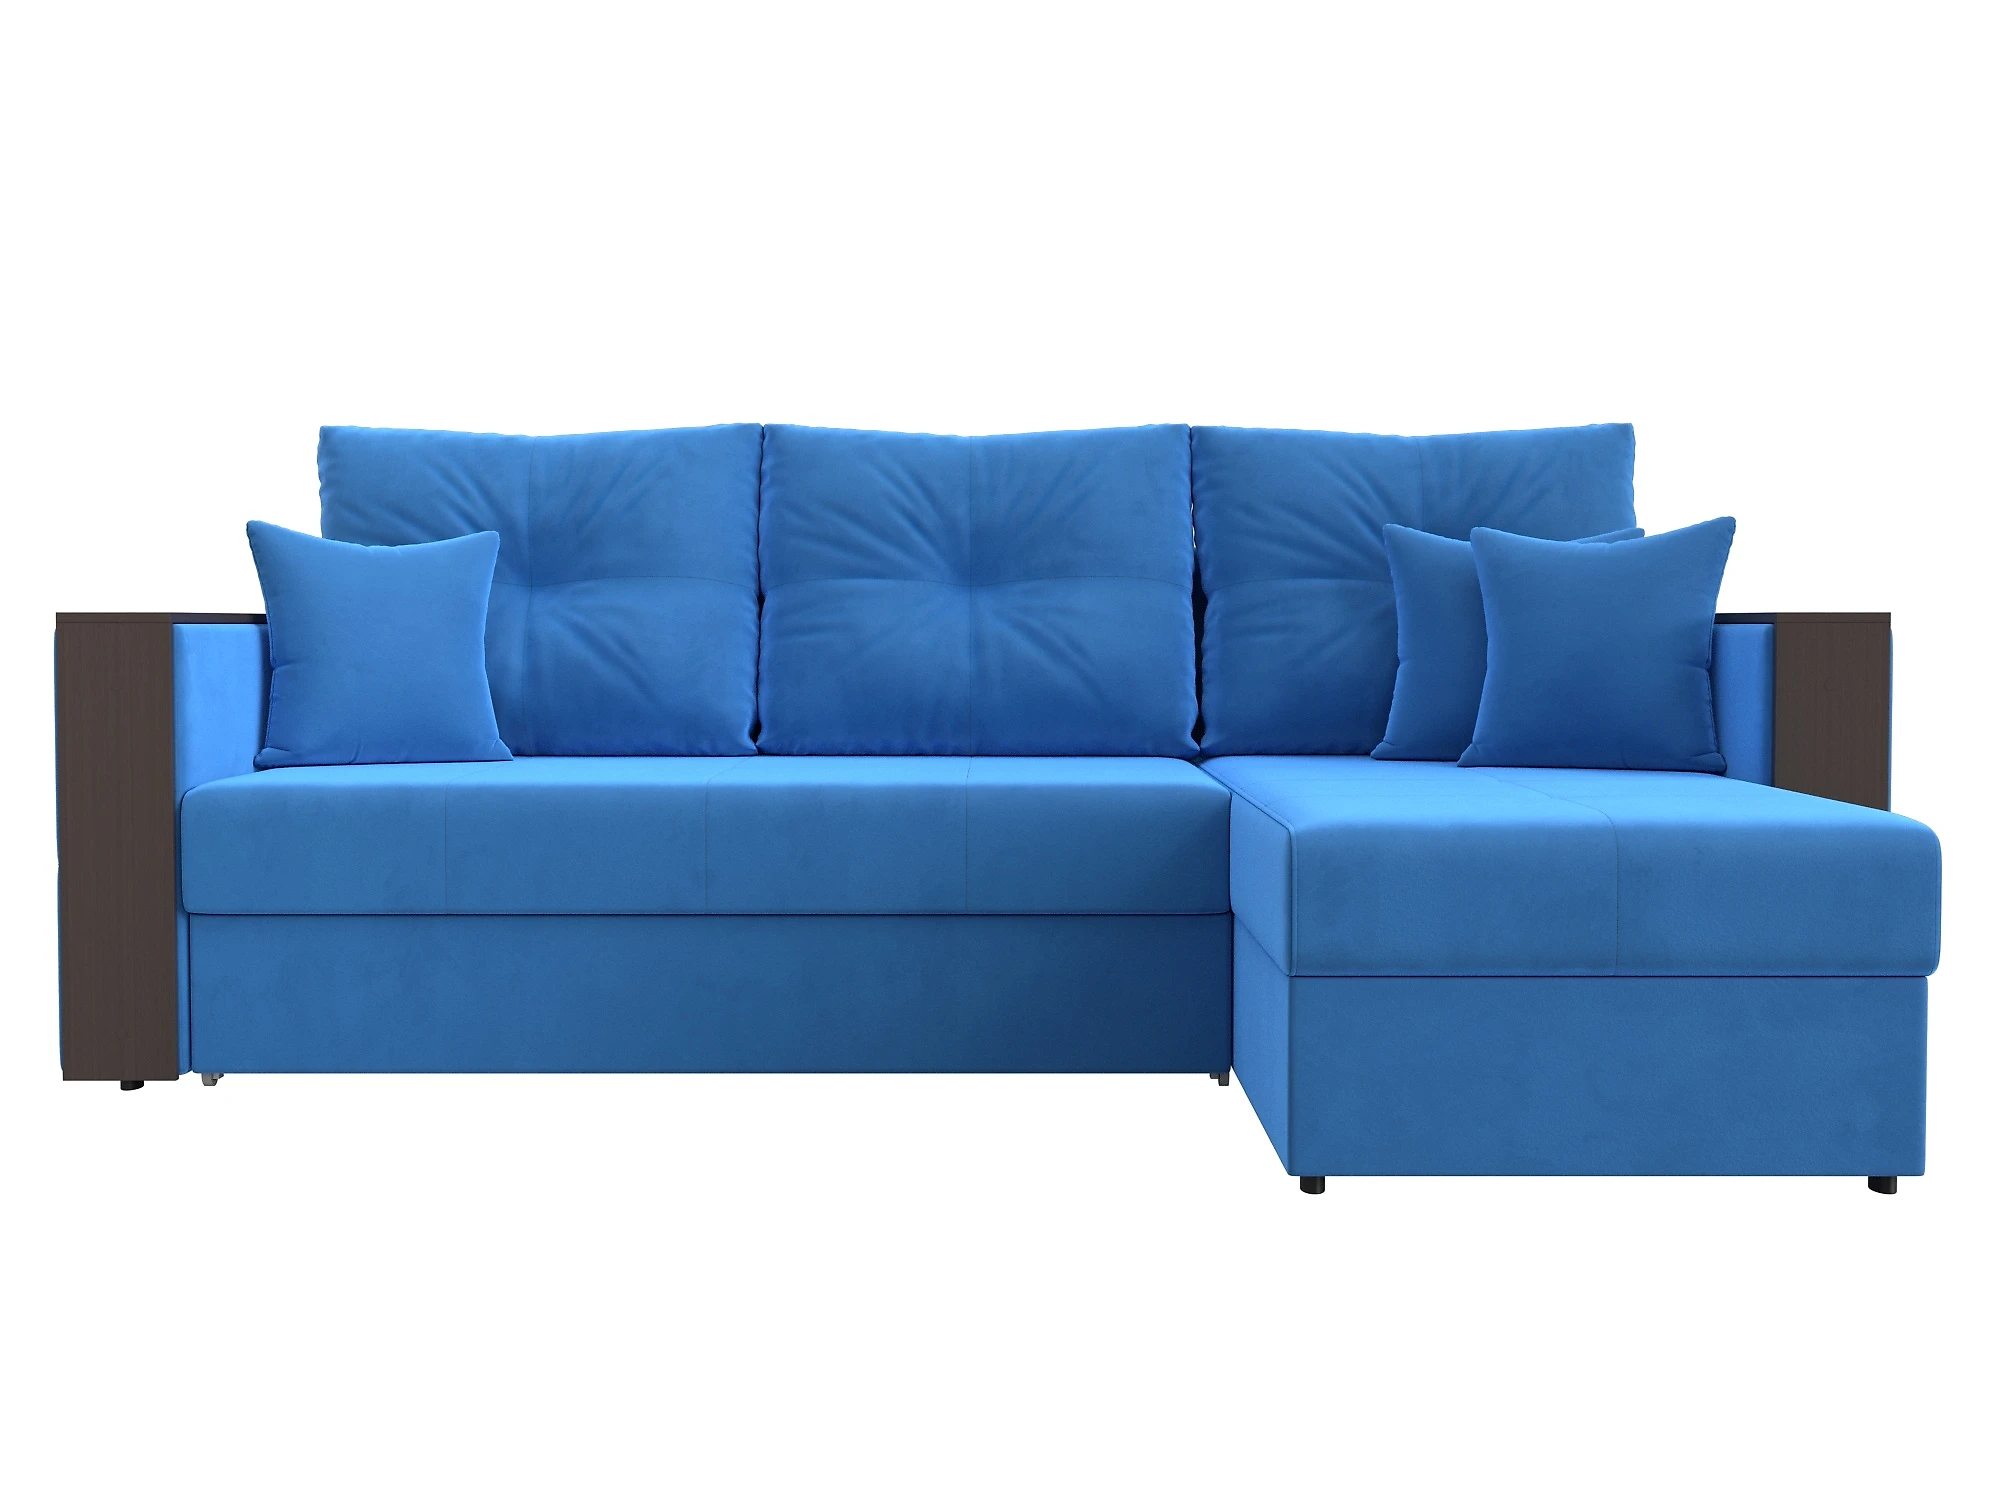  голубой диван  Валенсия Плюш Дизайн 3